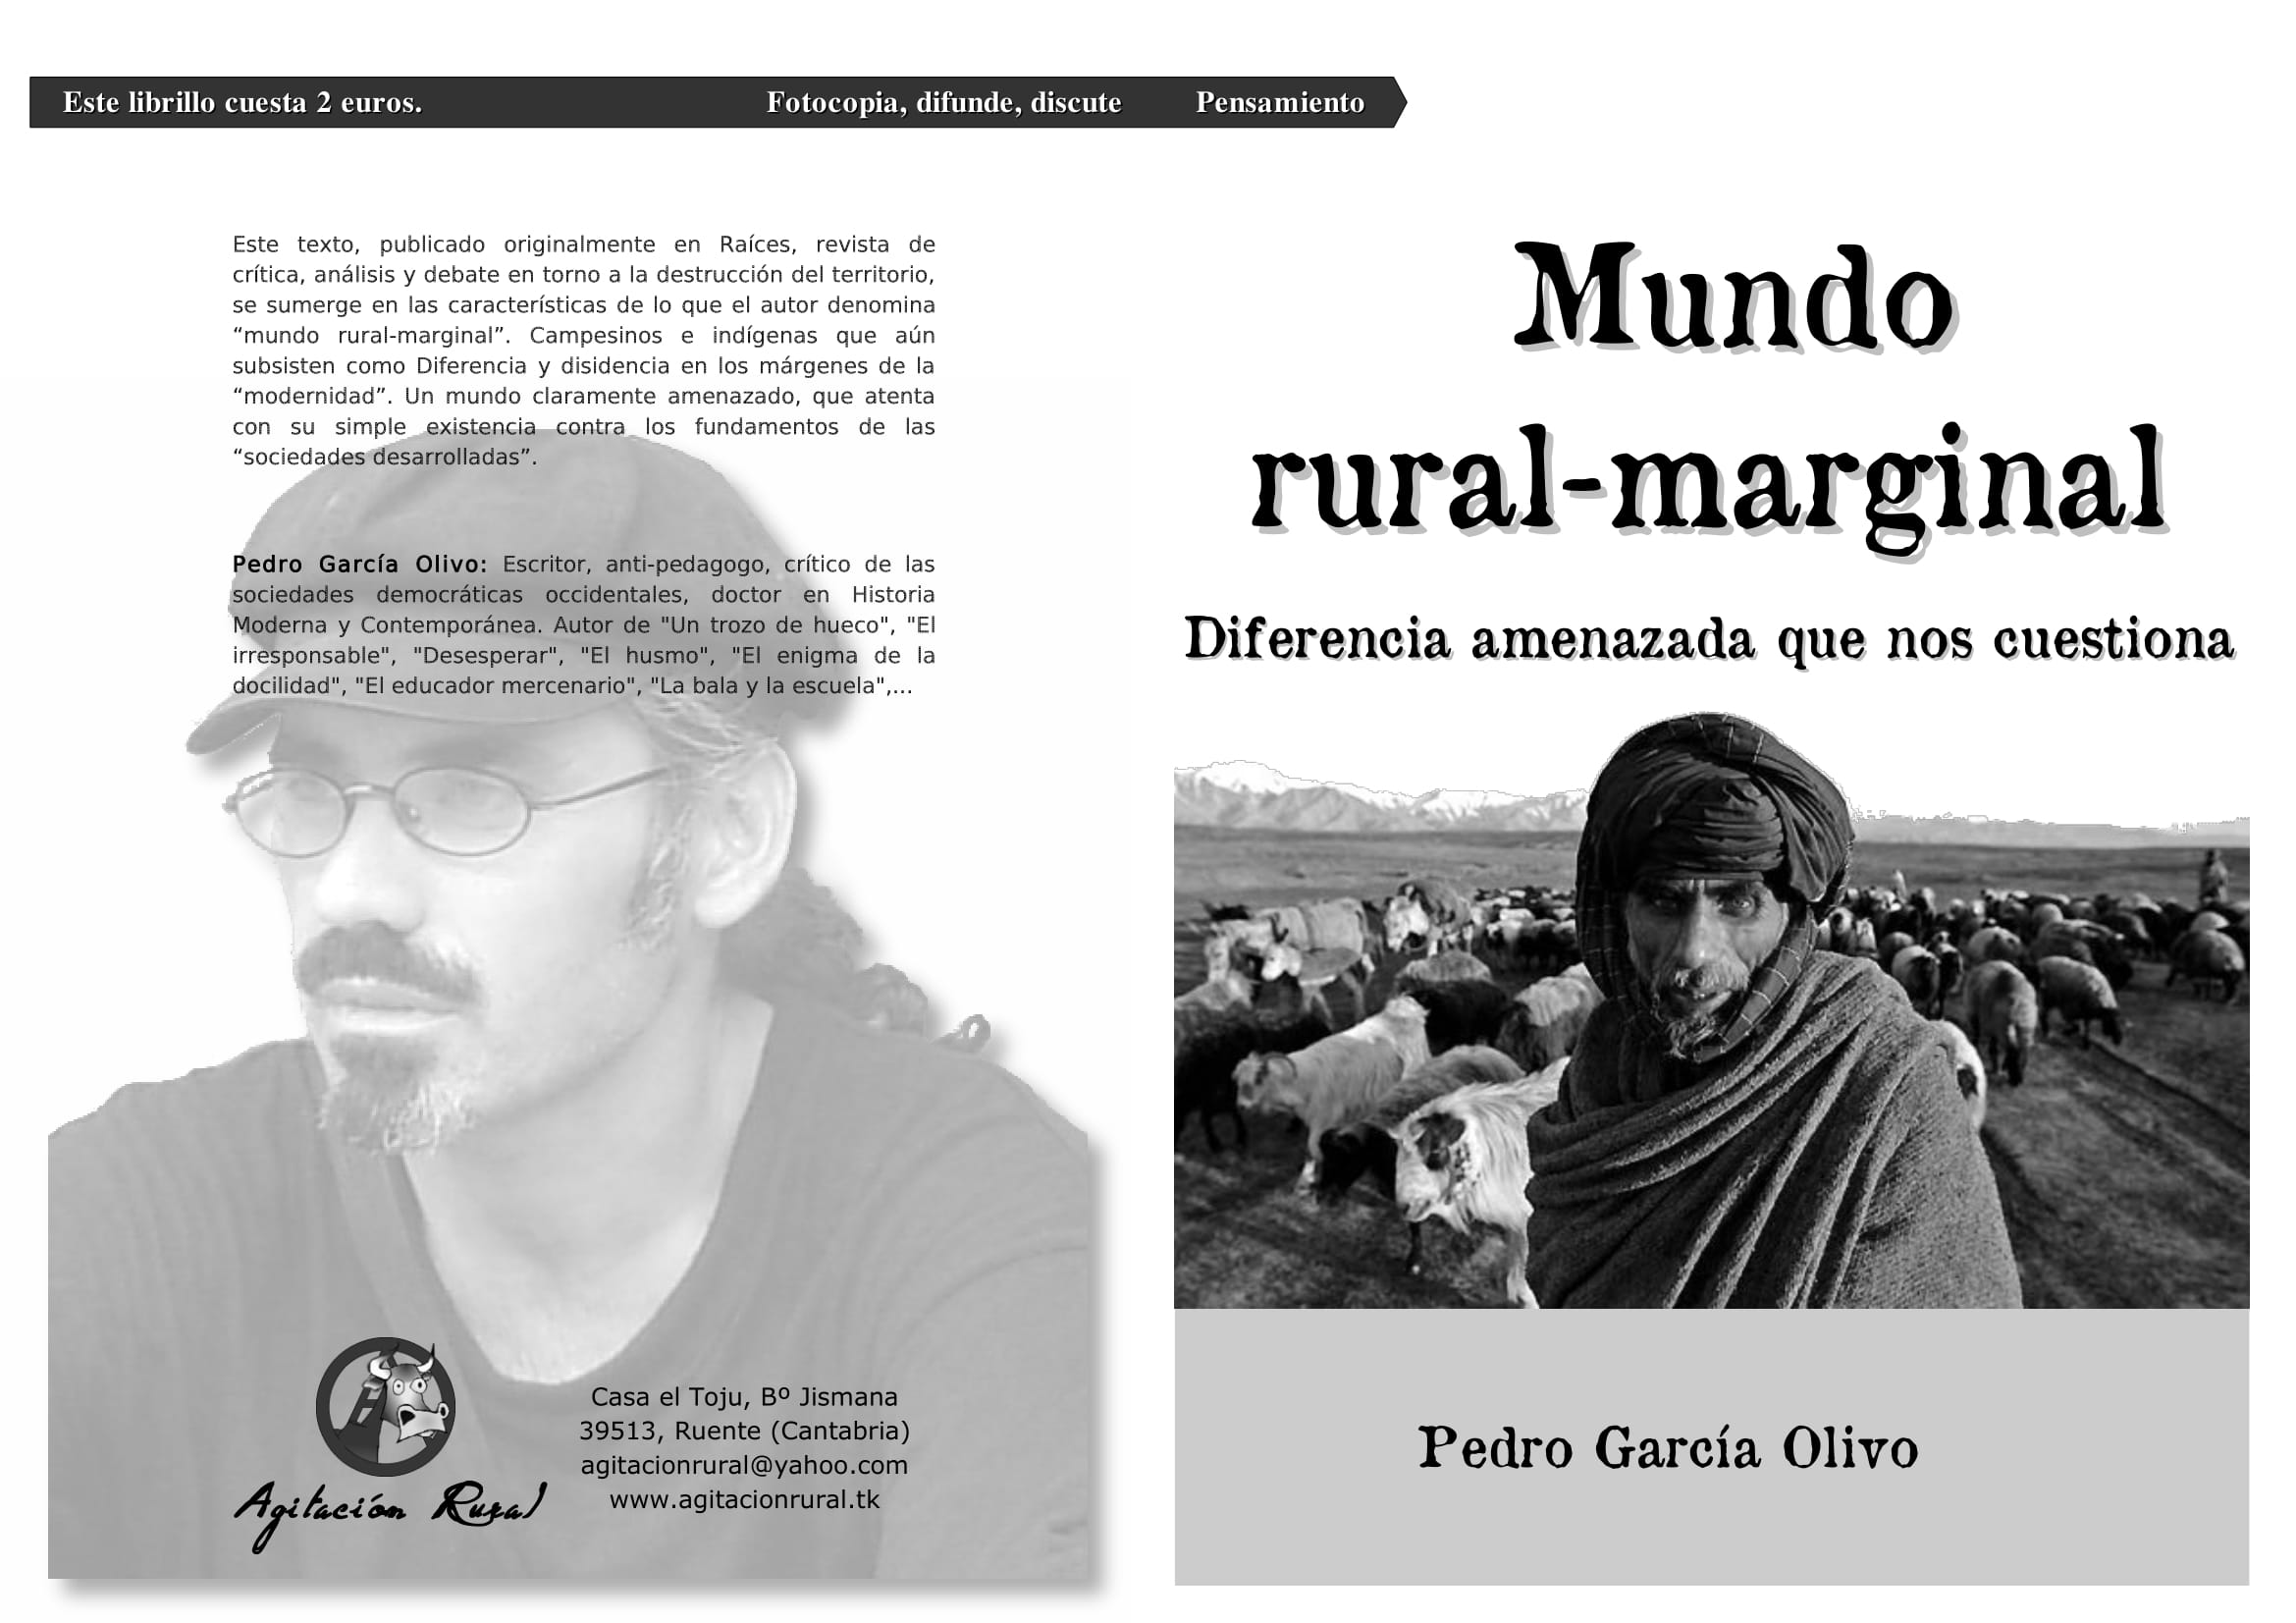 Mundo rural-marginal_Portada-1